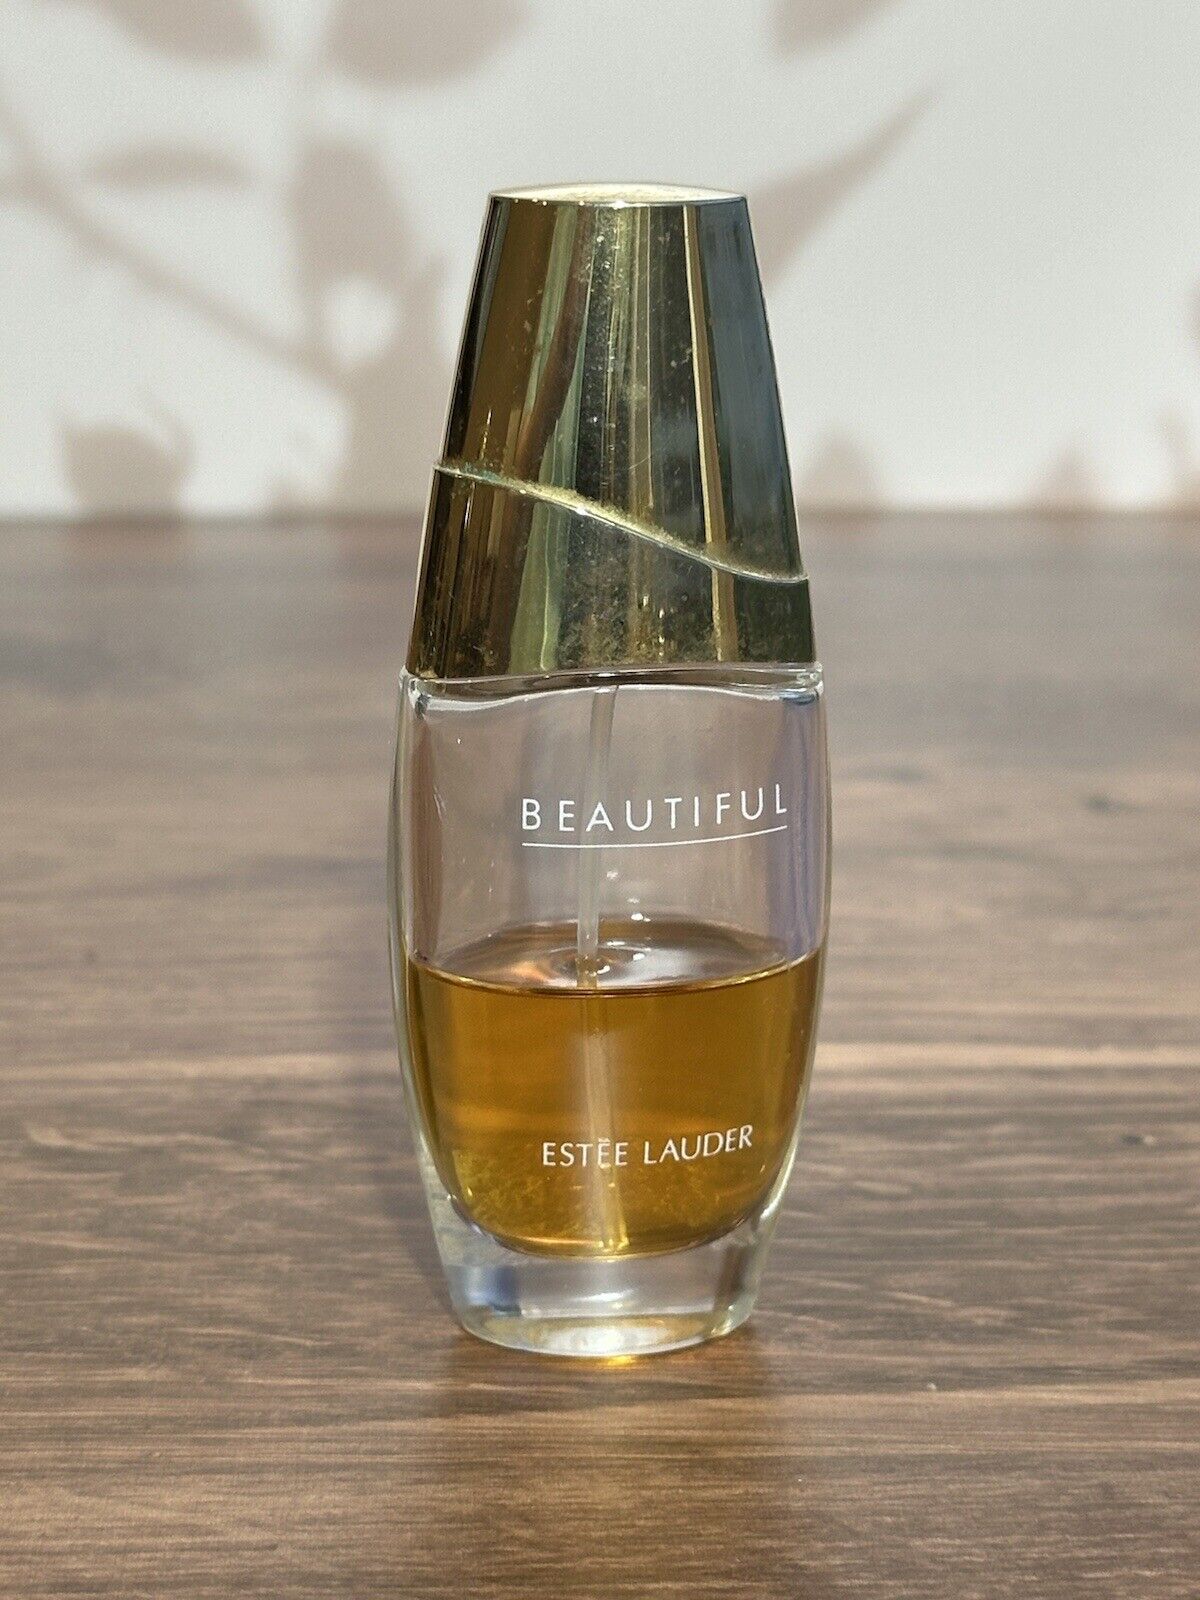 Estee Lauder Beautiful Eau de Parfum Spray 75ml Appr 45%  Full Vintage